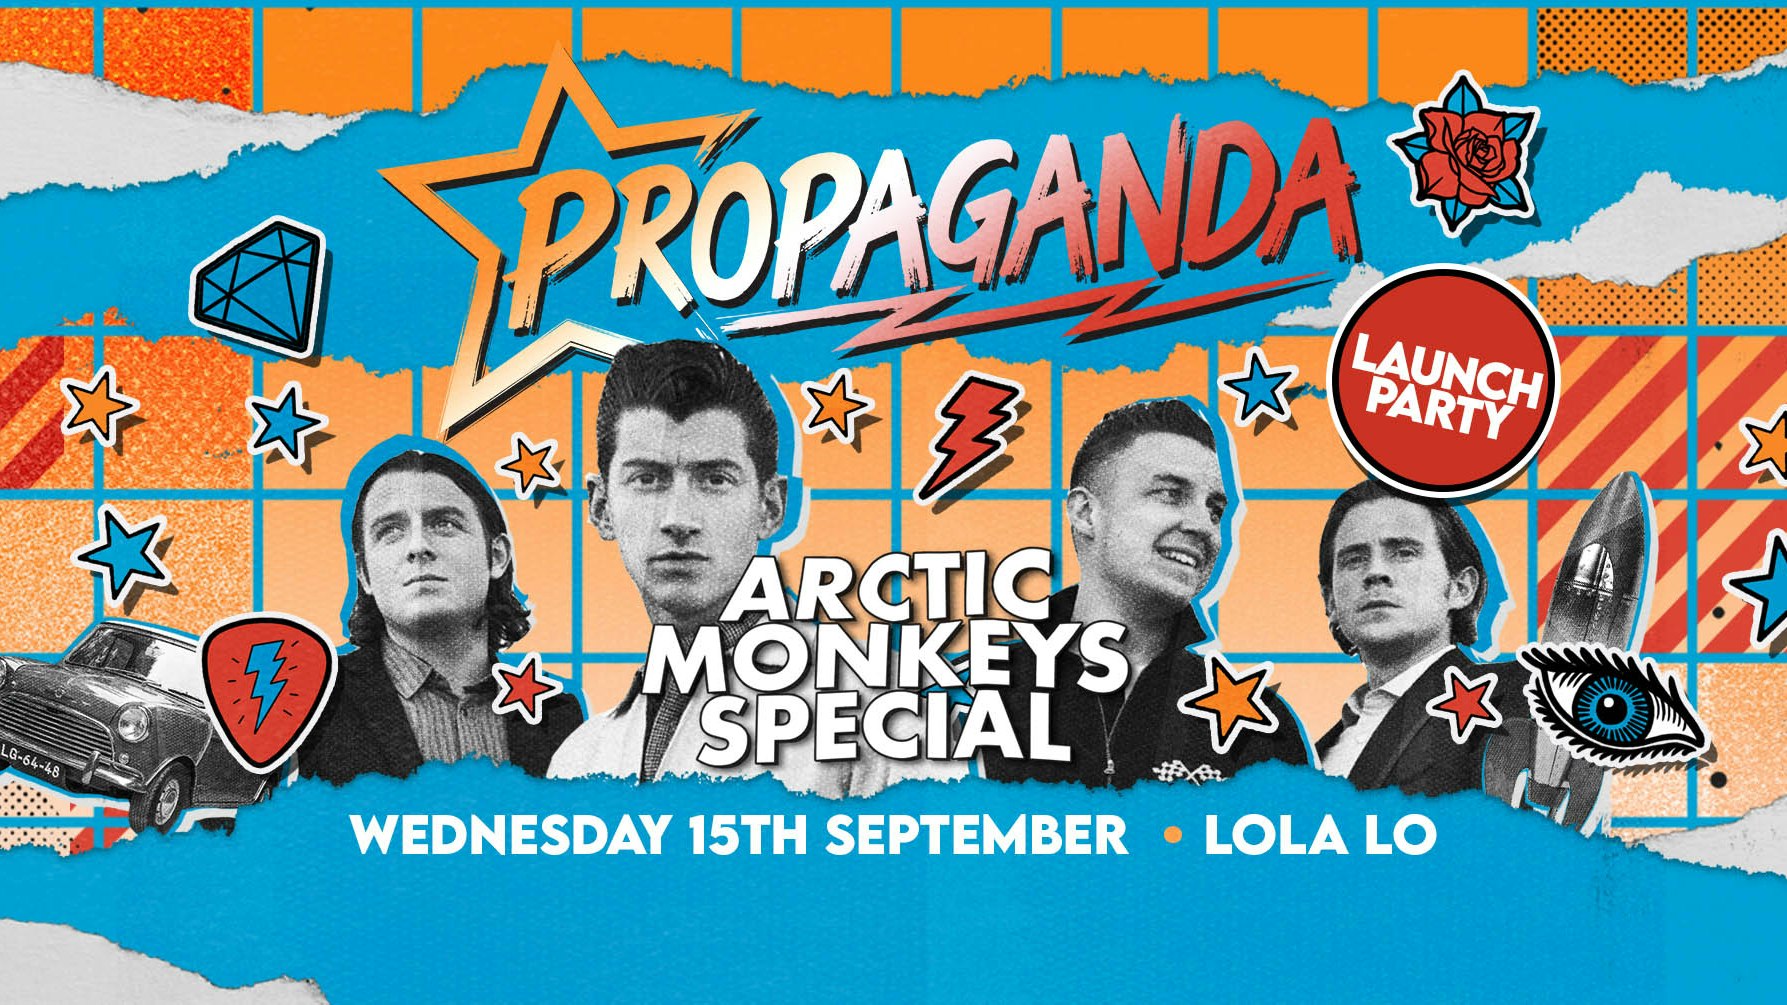 Propaganda Cambridge – Arctic Monkeys Launch Party at Lola Lo!